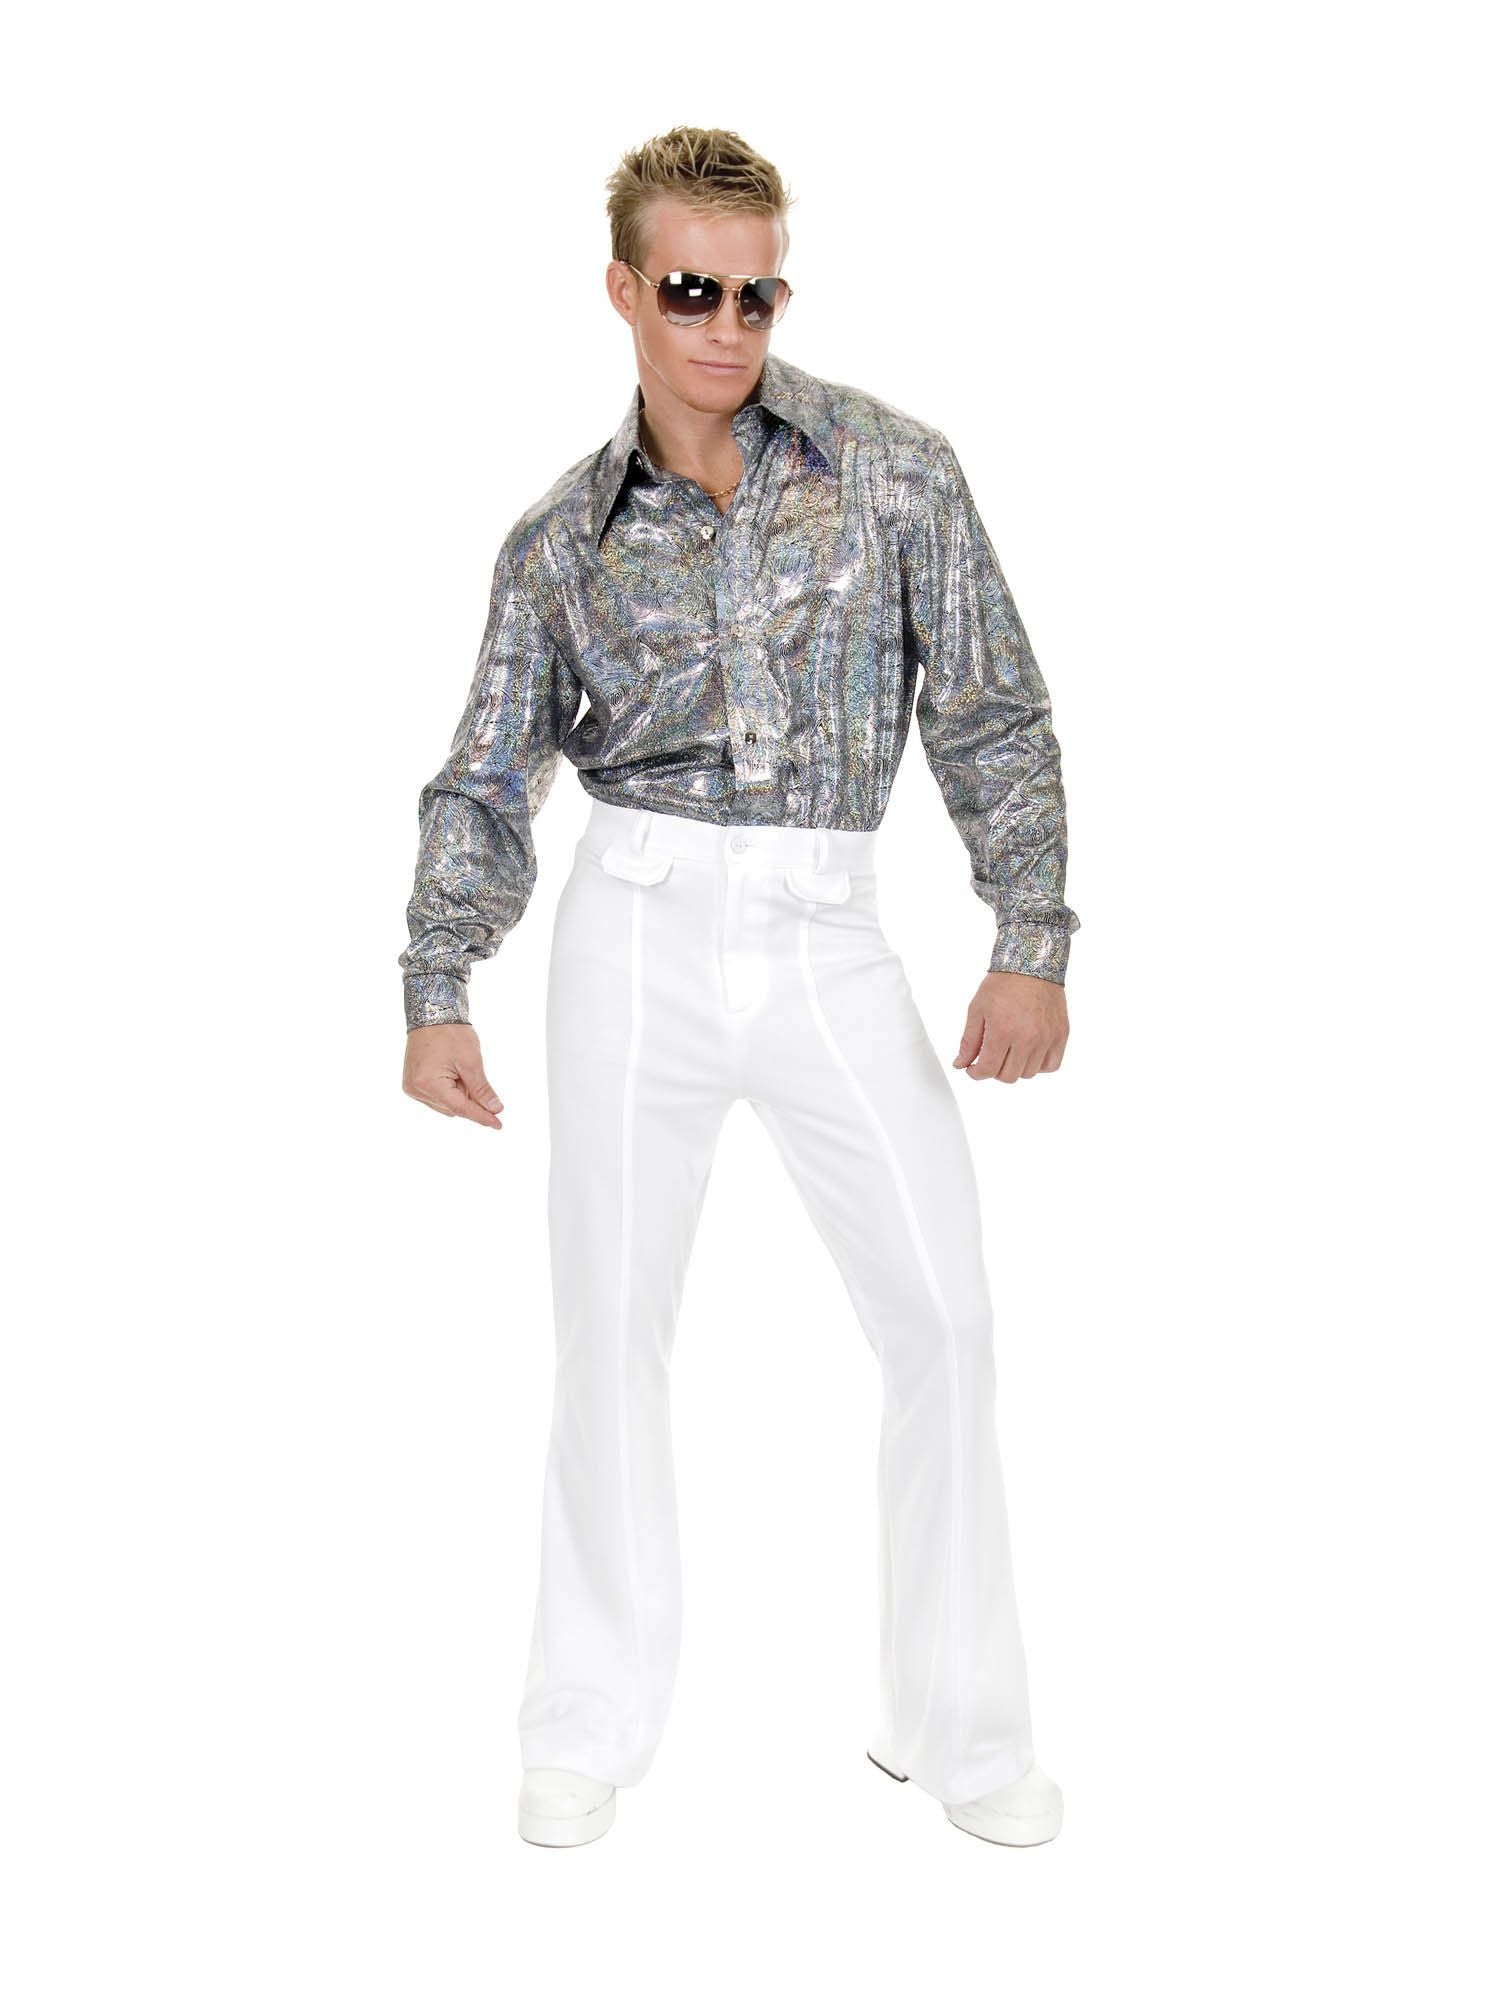 Men's White Disco Pants - costumes.com